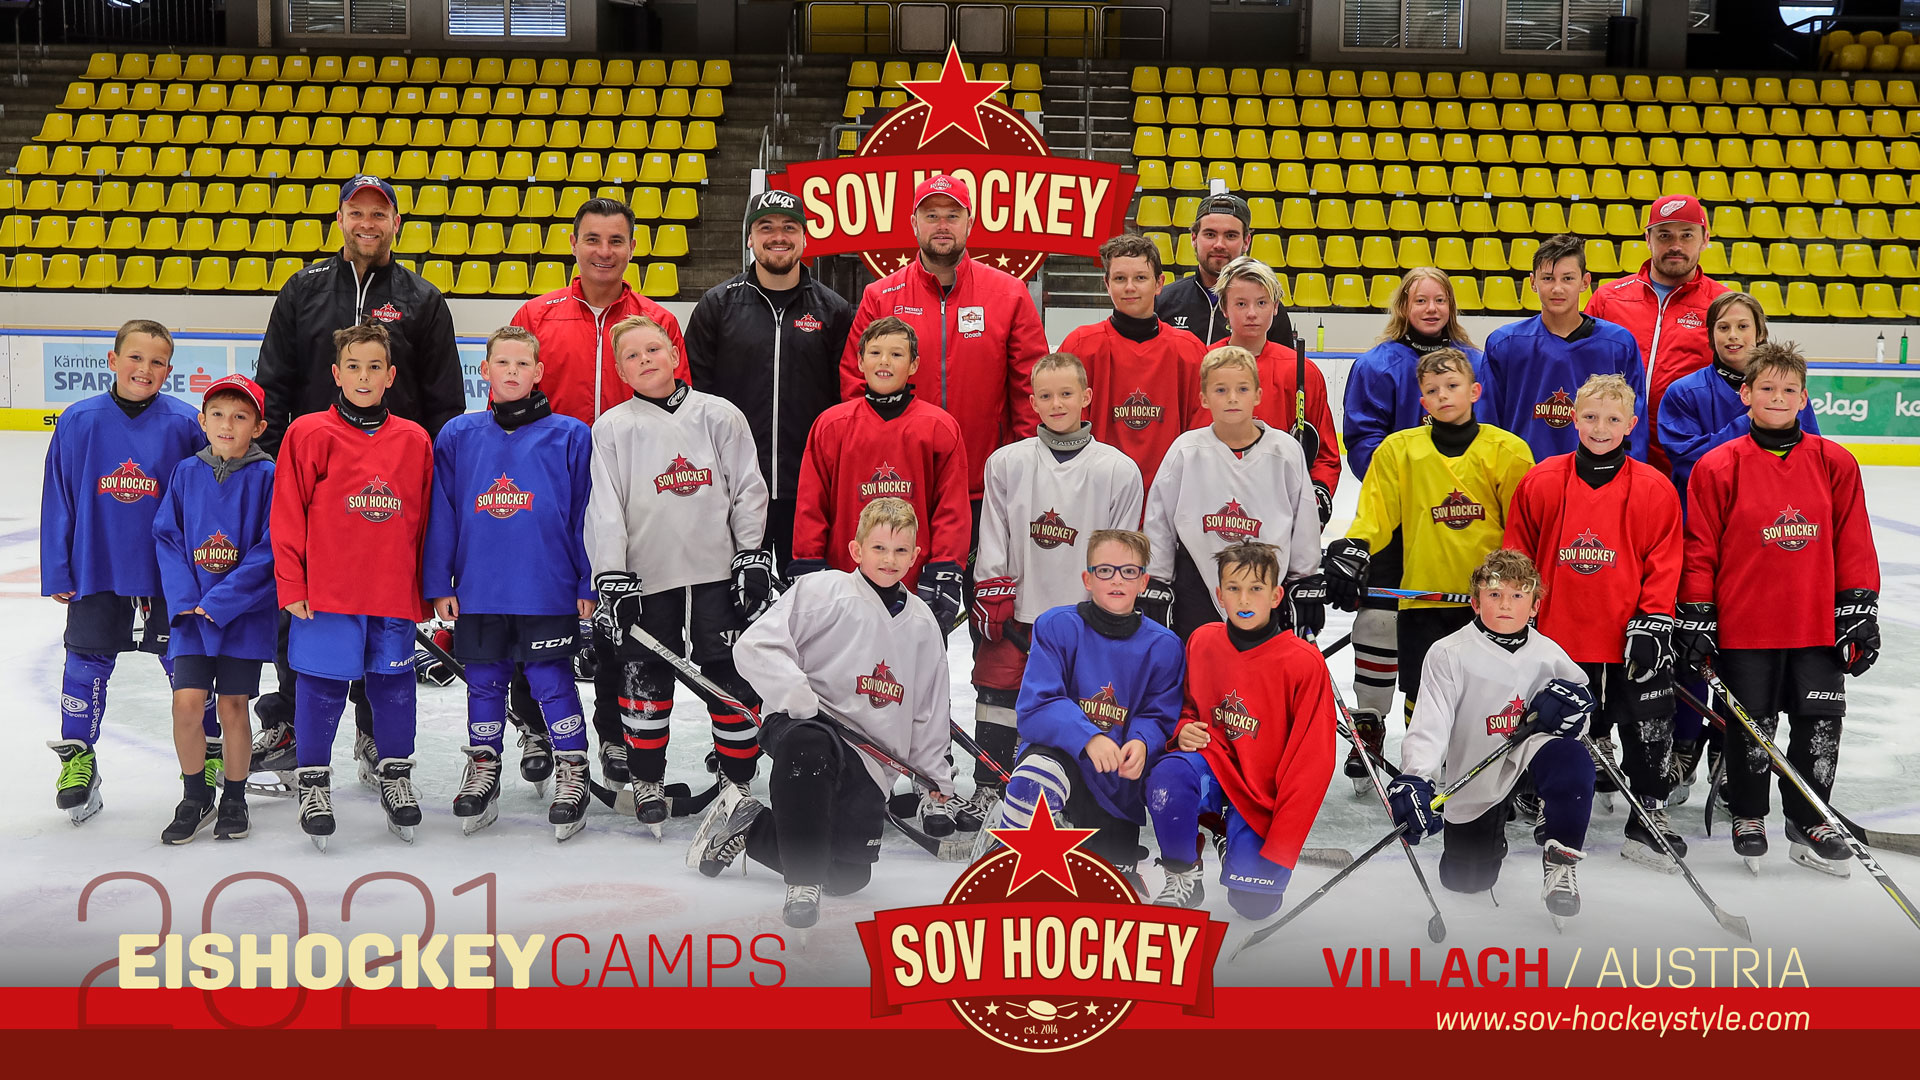 SOV Hockeystyle Camp Villach 2021